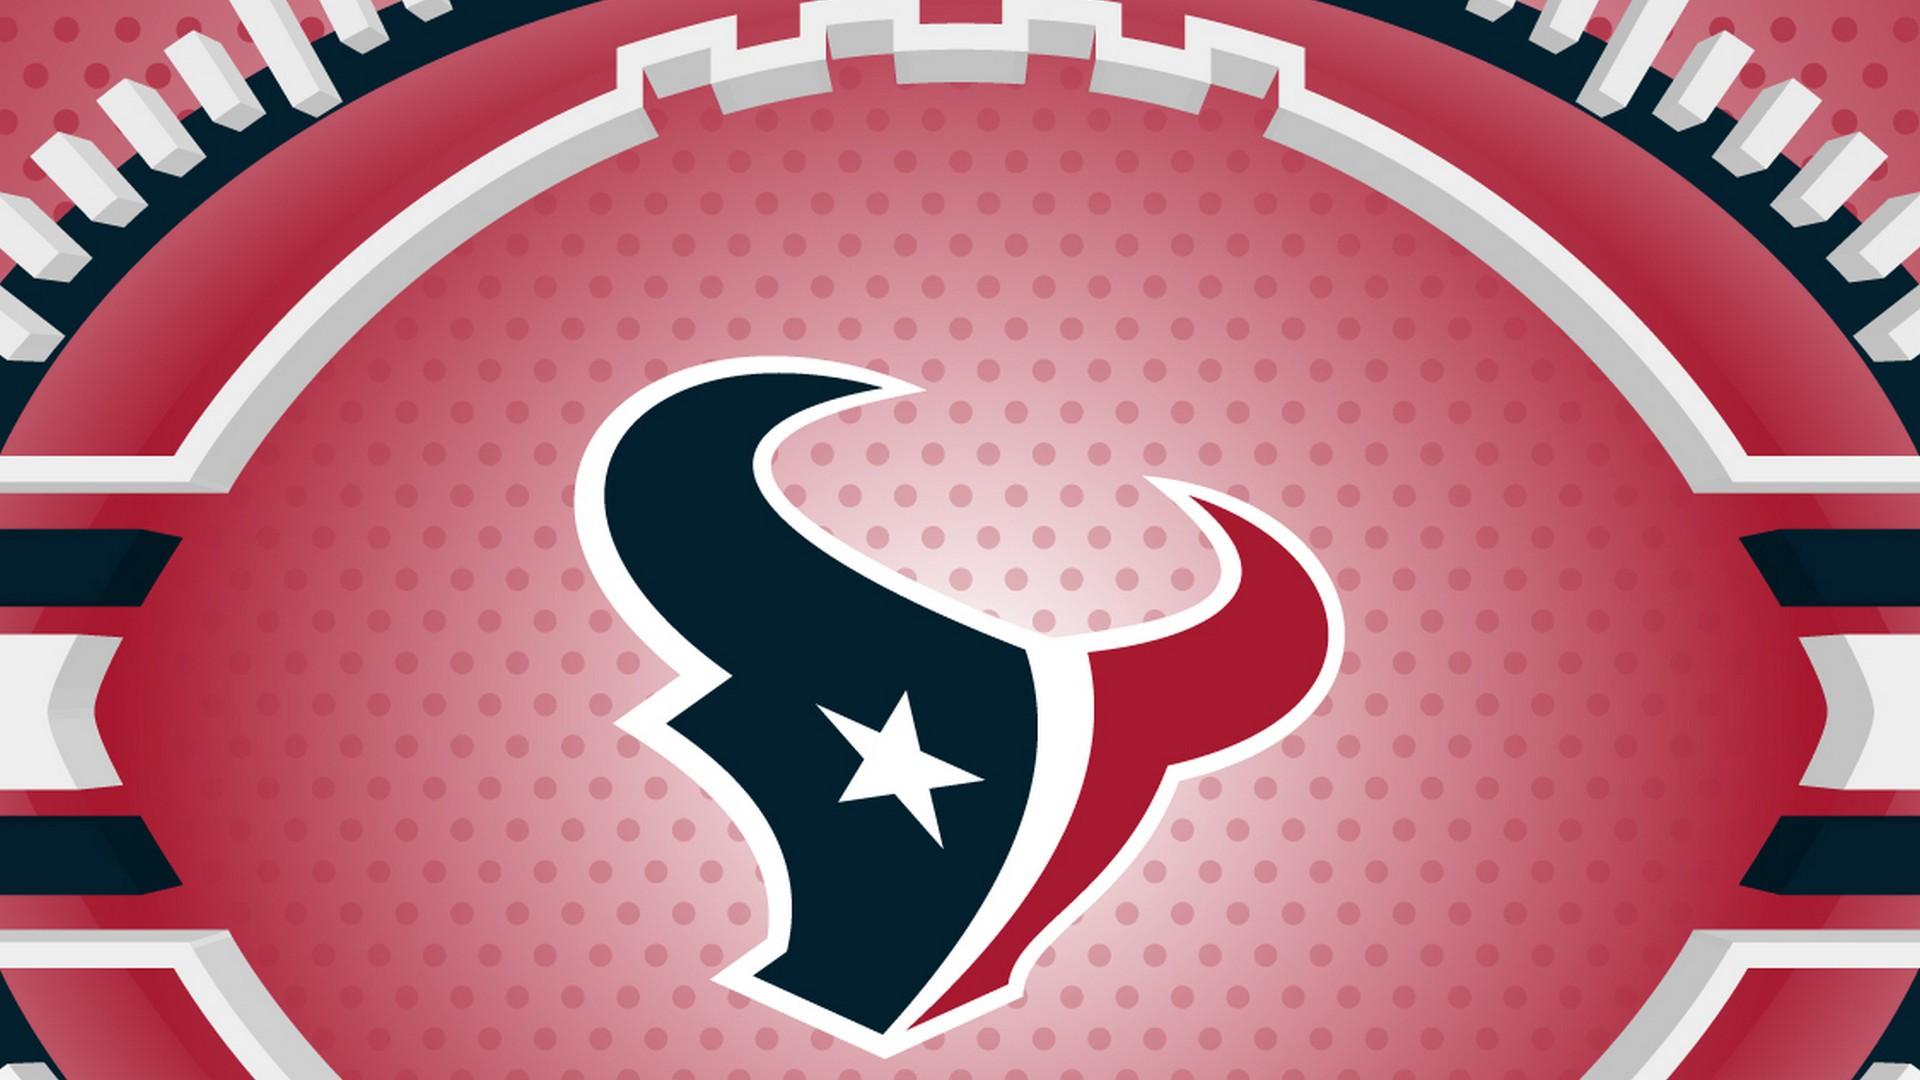 Wallpaper HD Houston Texans NFL NFL Football Wallpaper